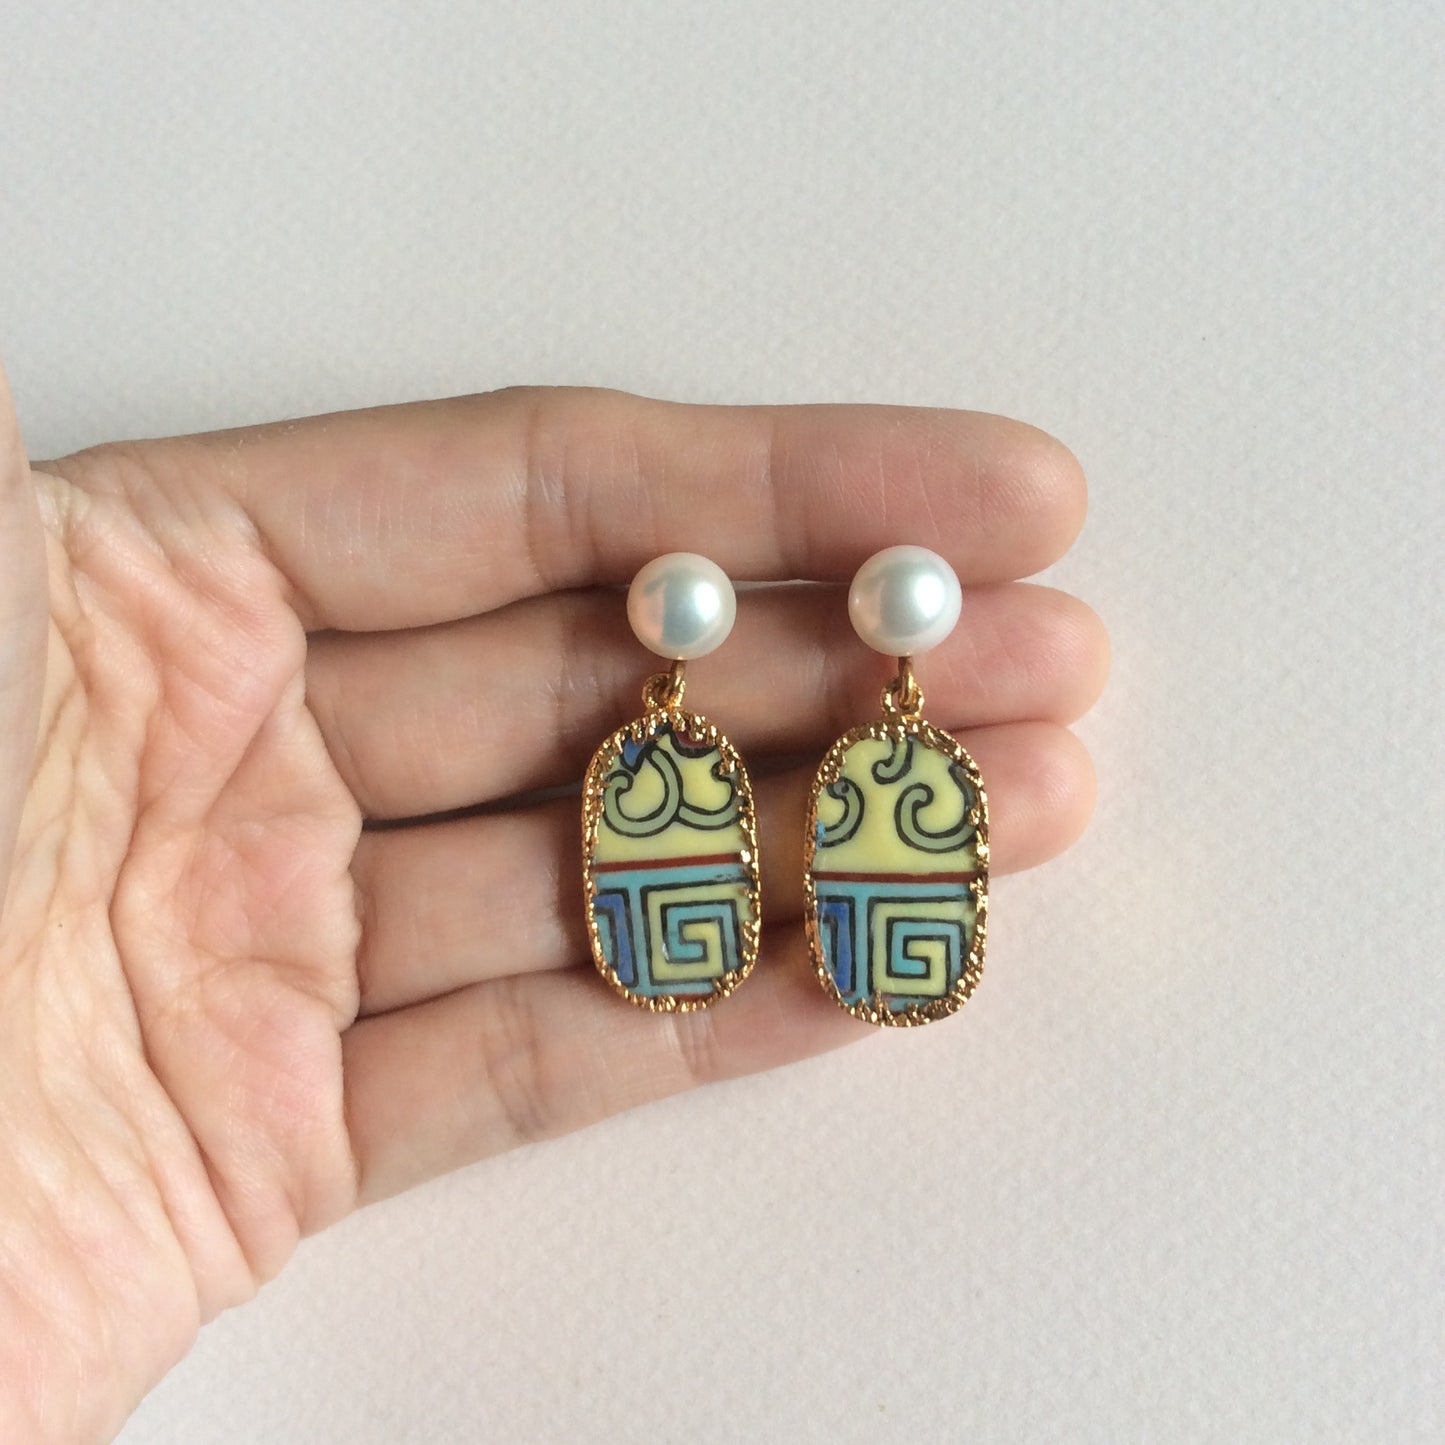 Peranakan porcelain earrings with freshwater pearl studs